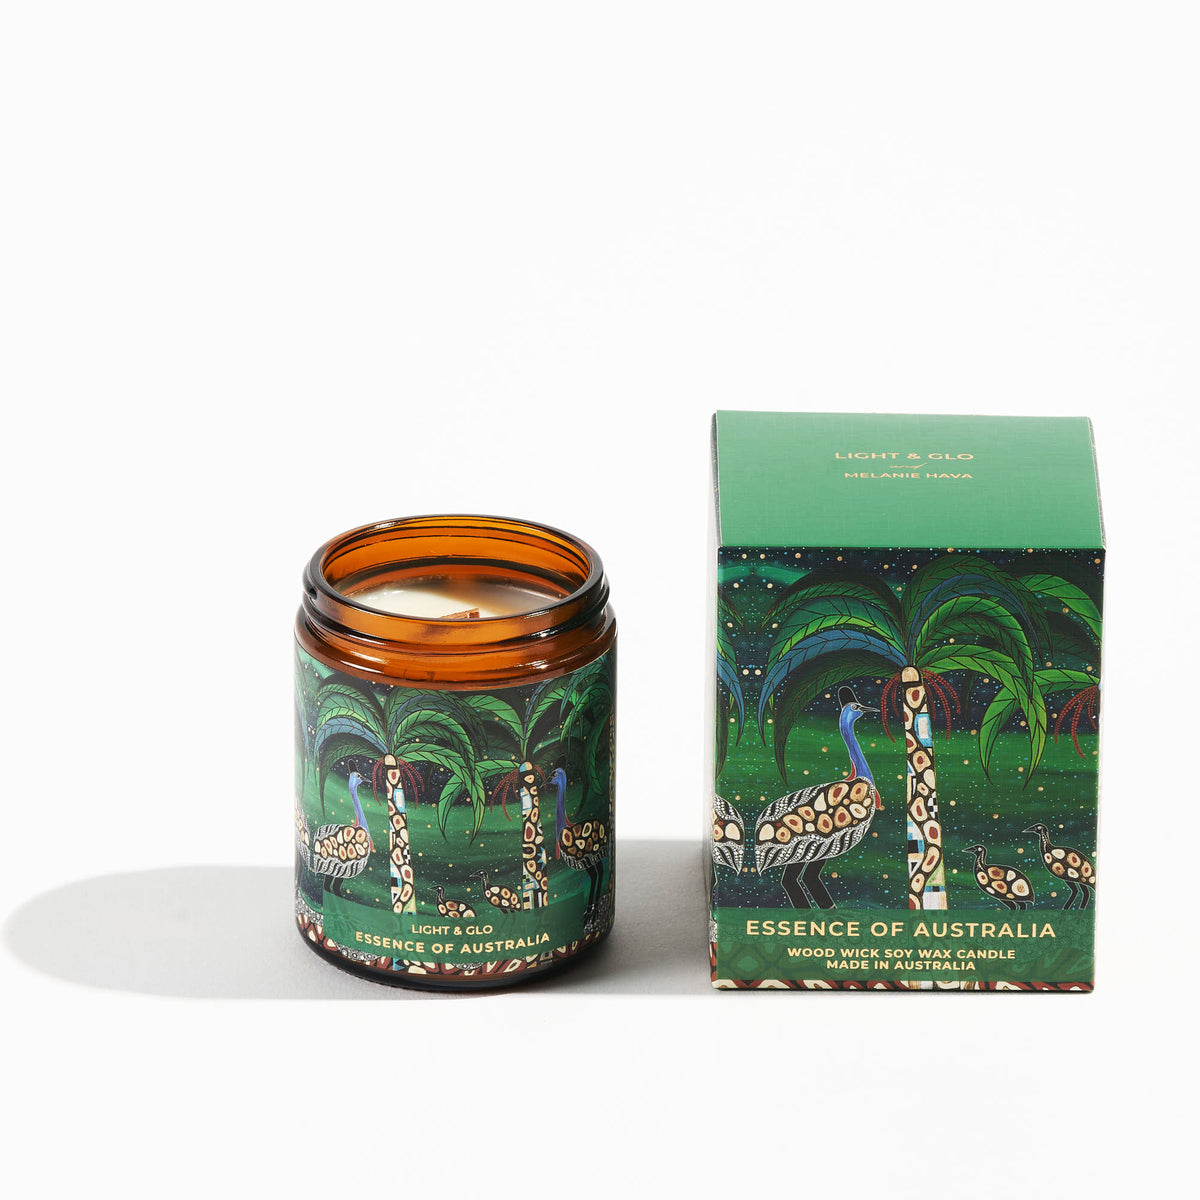 Soul Australiana - Essence of Australia | Luxury Candles &amp; Home Fragrances by Light + Glo